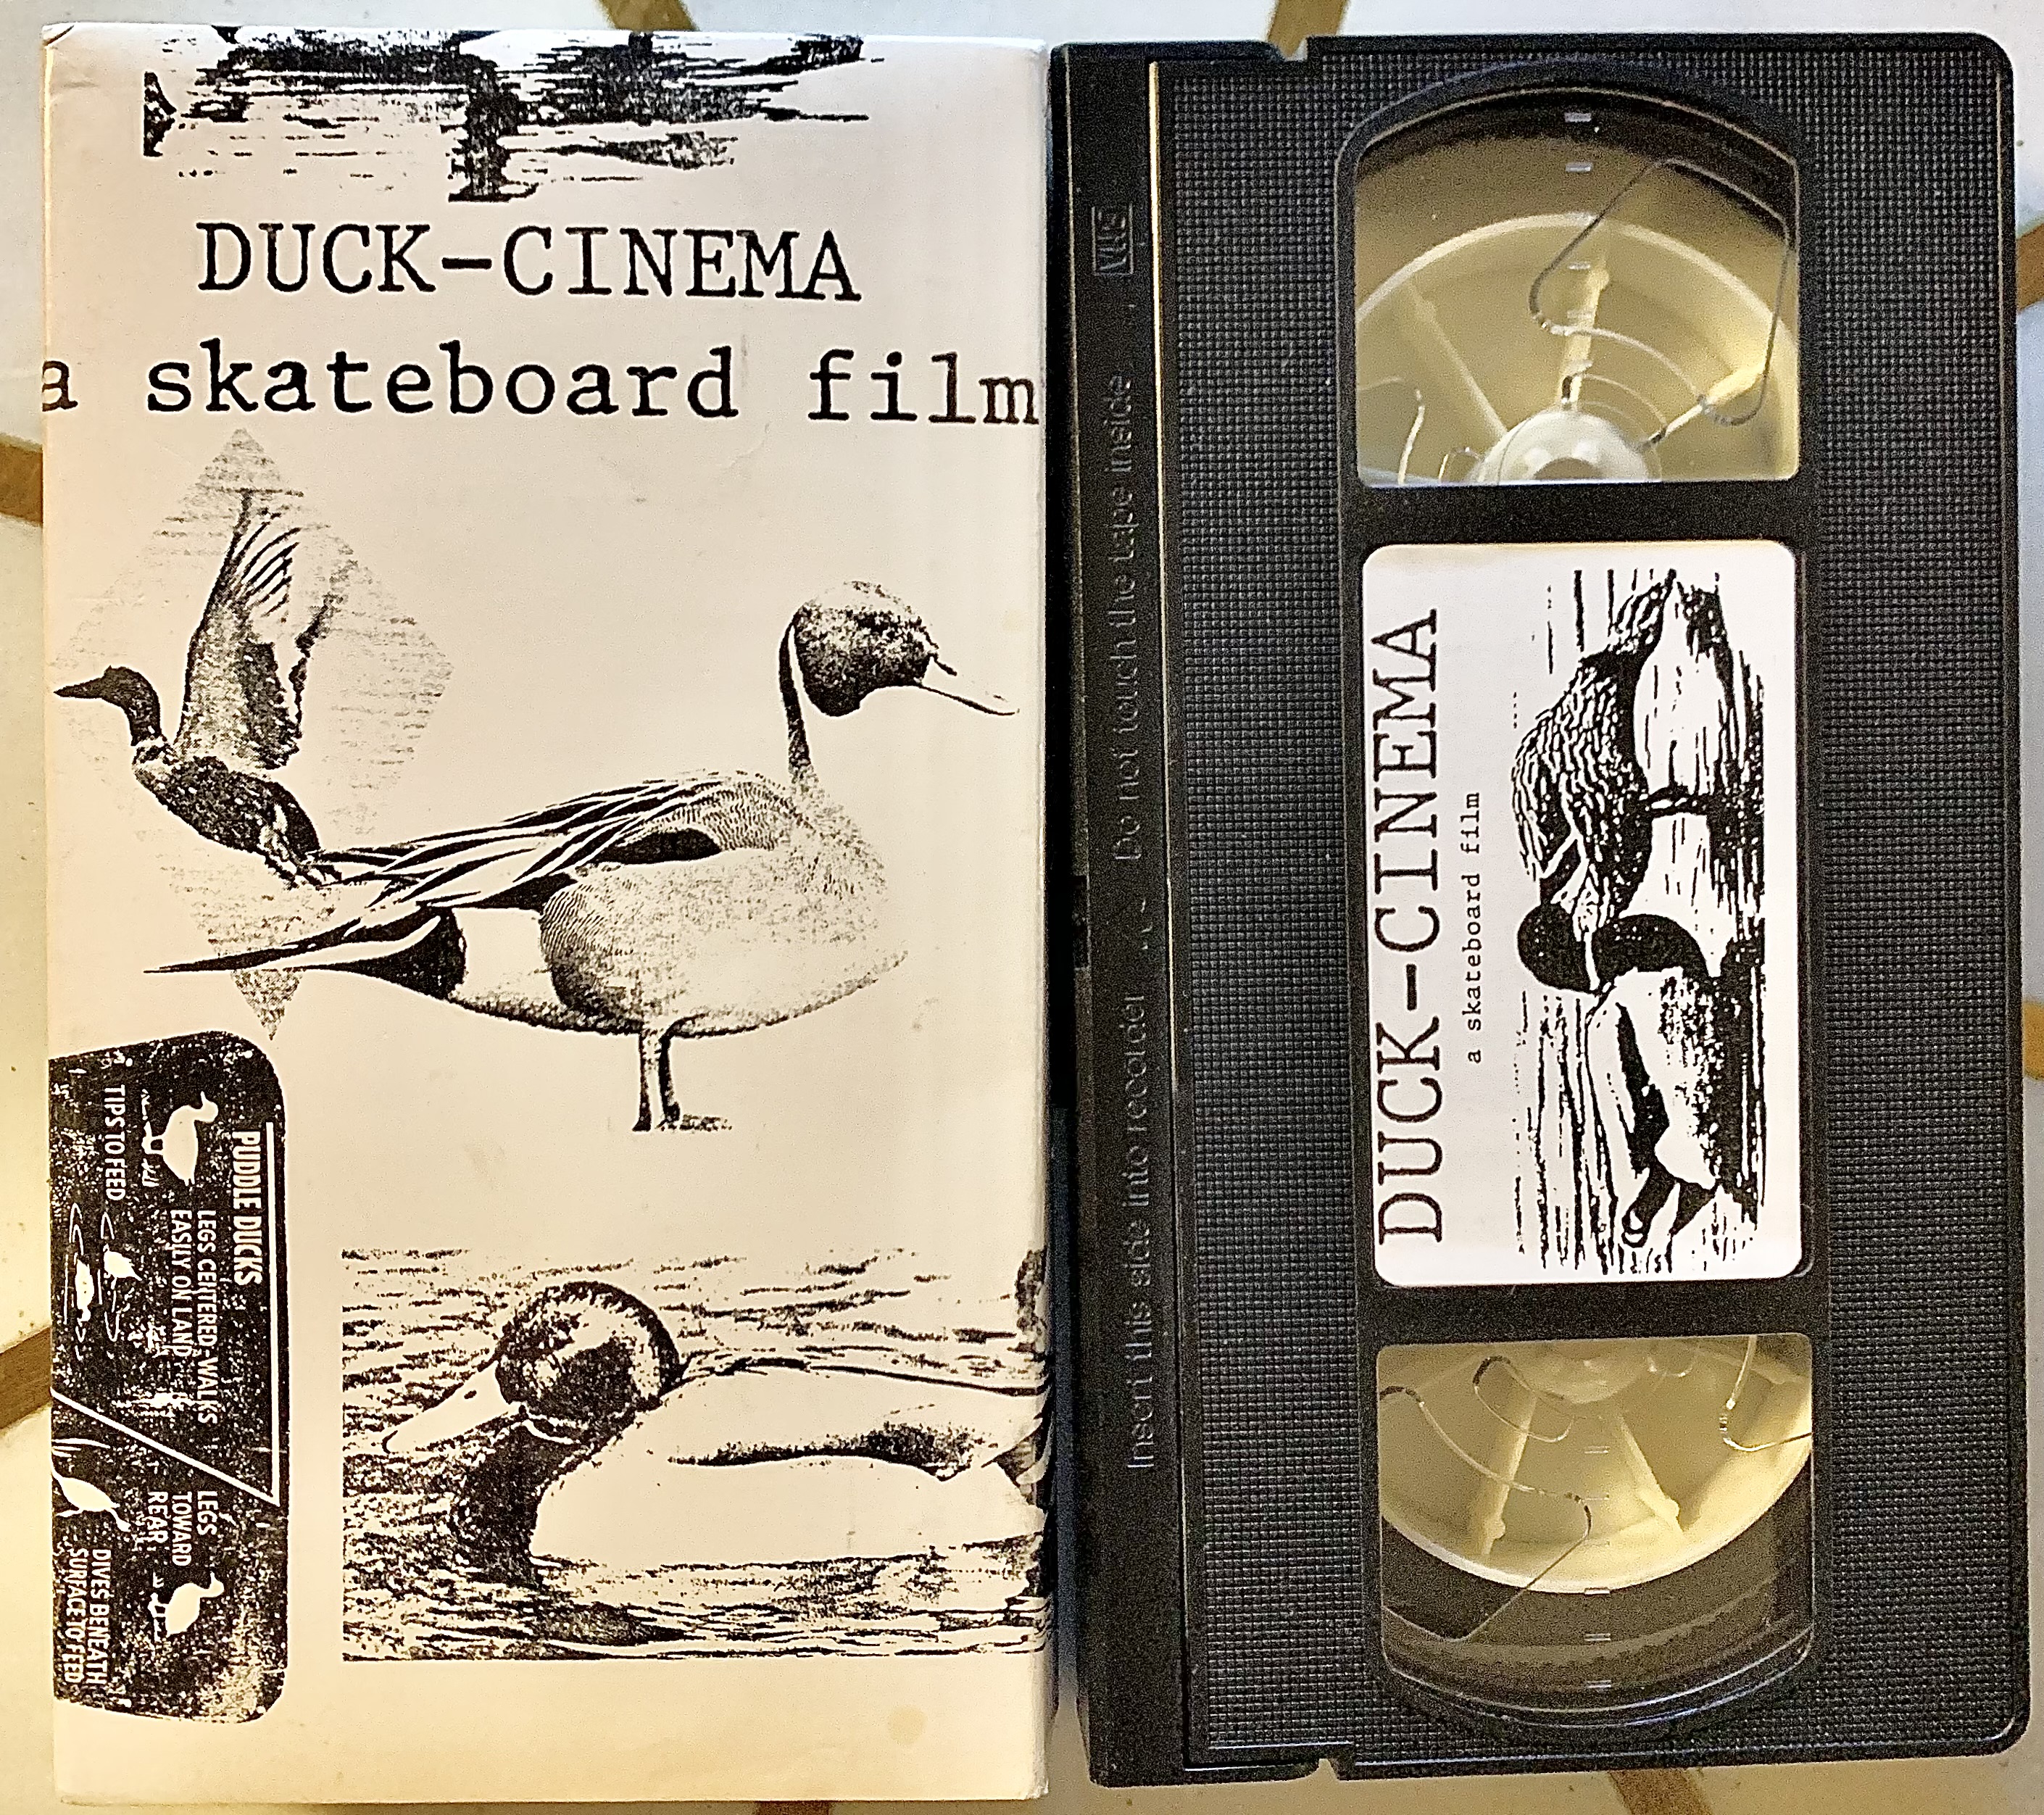 Duck-Cinema cover art